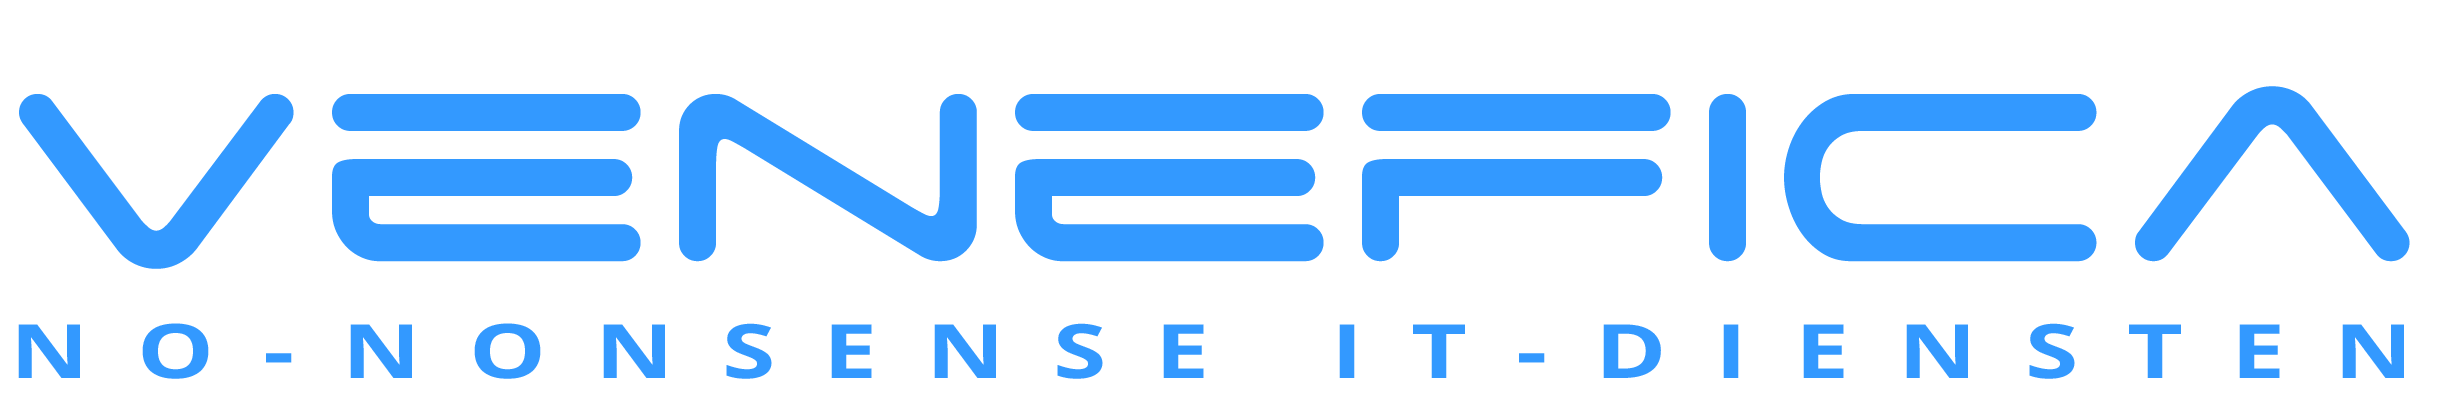 Venefica logo